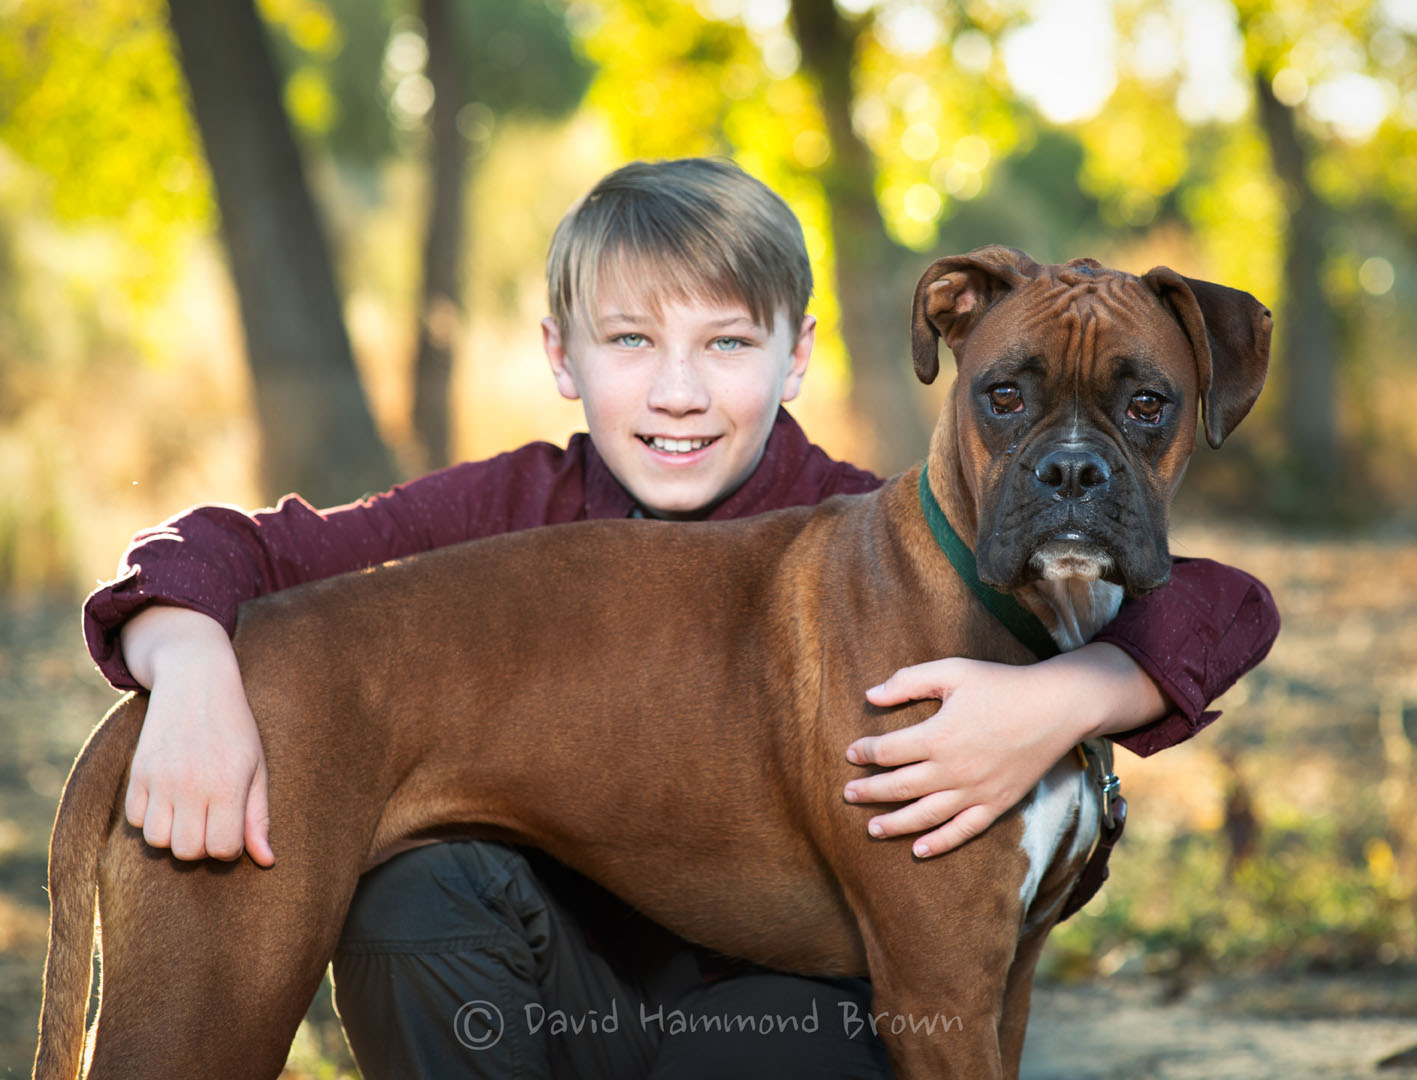 David Hammond Brown Photography - A boy and his dog